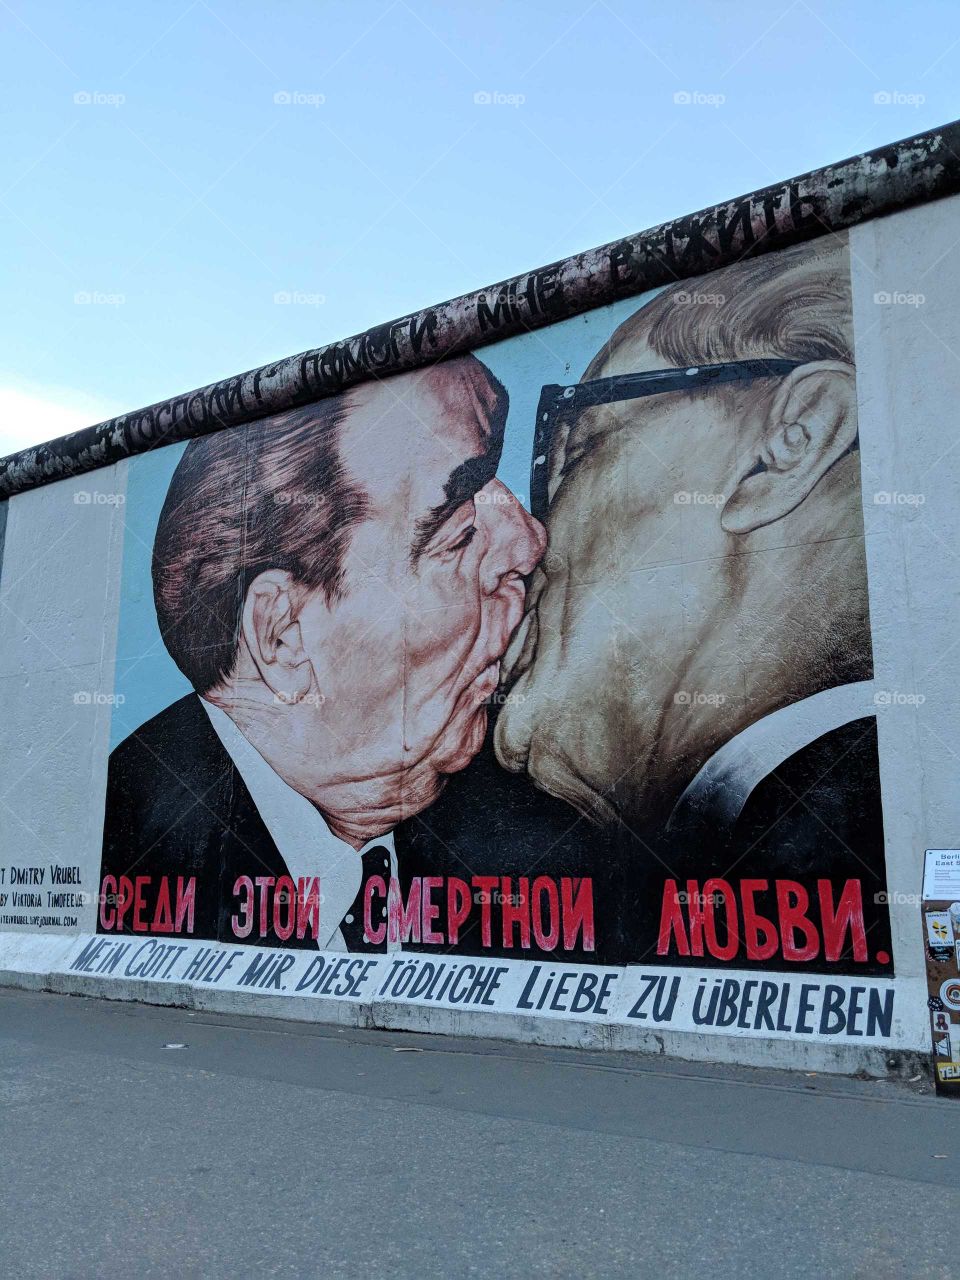 The Kiss - Berlin Wall